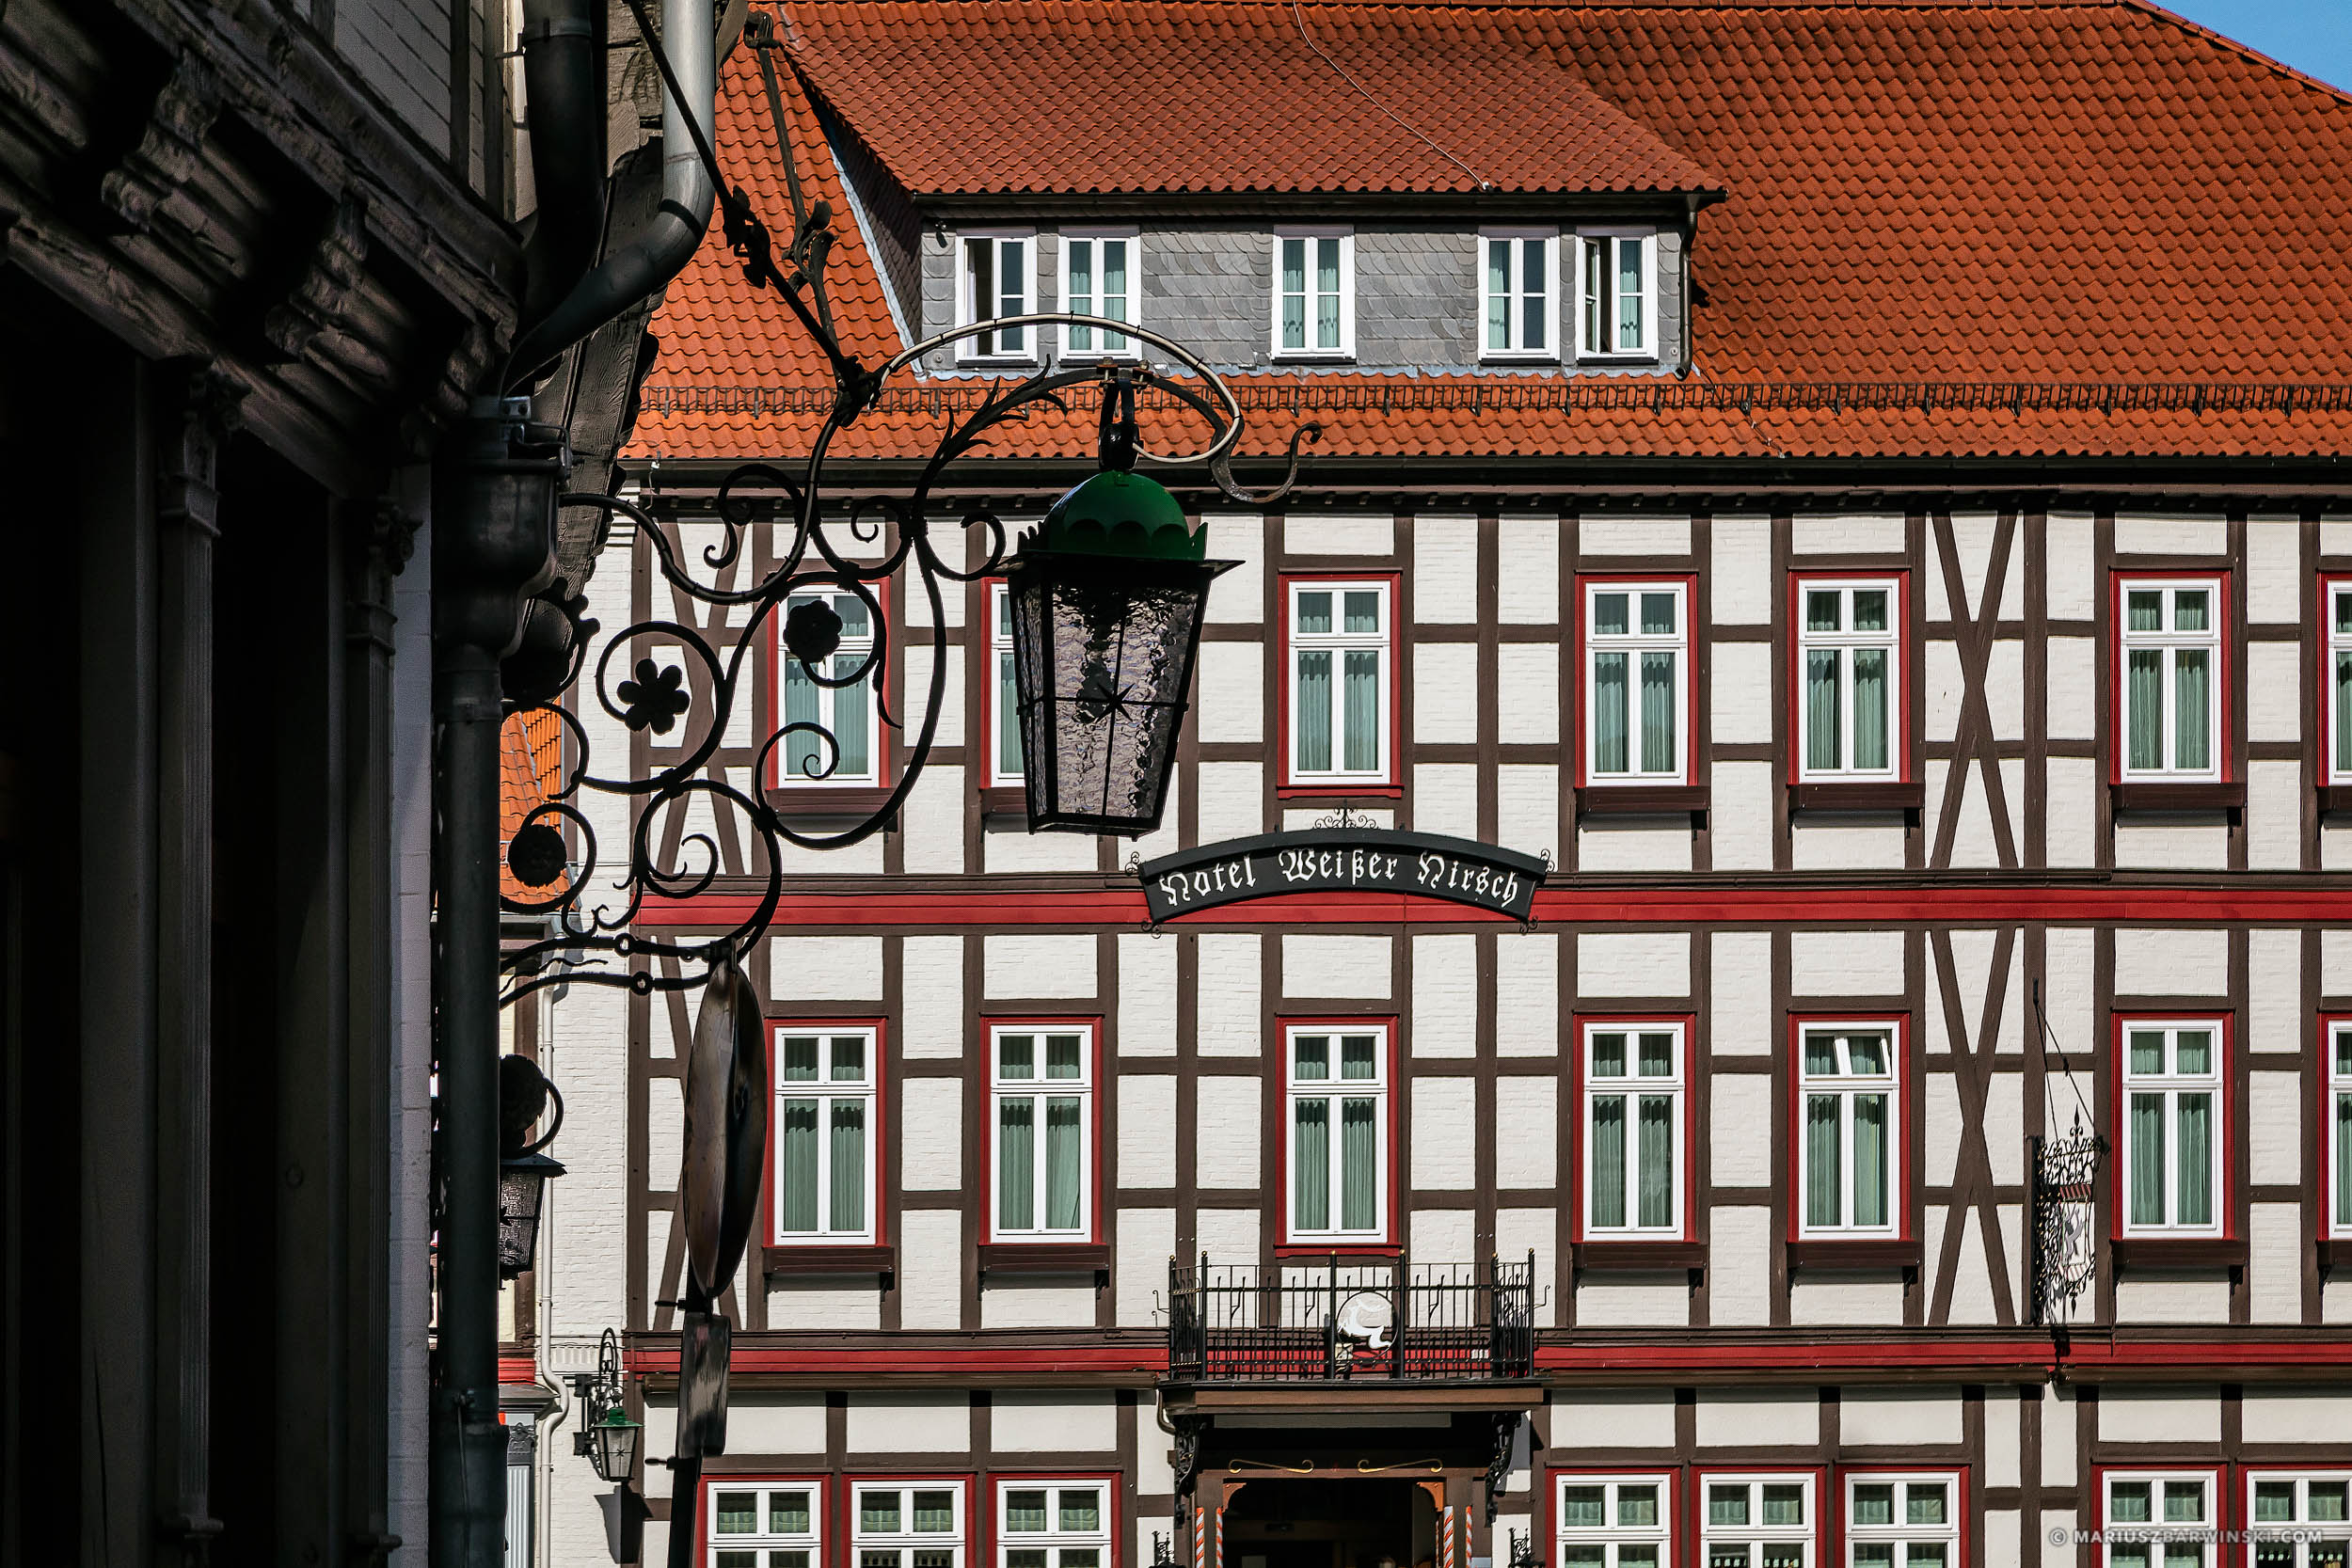 Houses in the market square in Wernigerode. Germany. Zabudowania